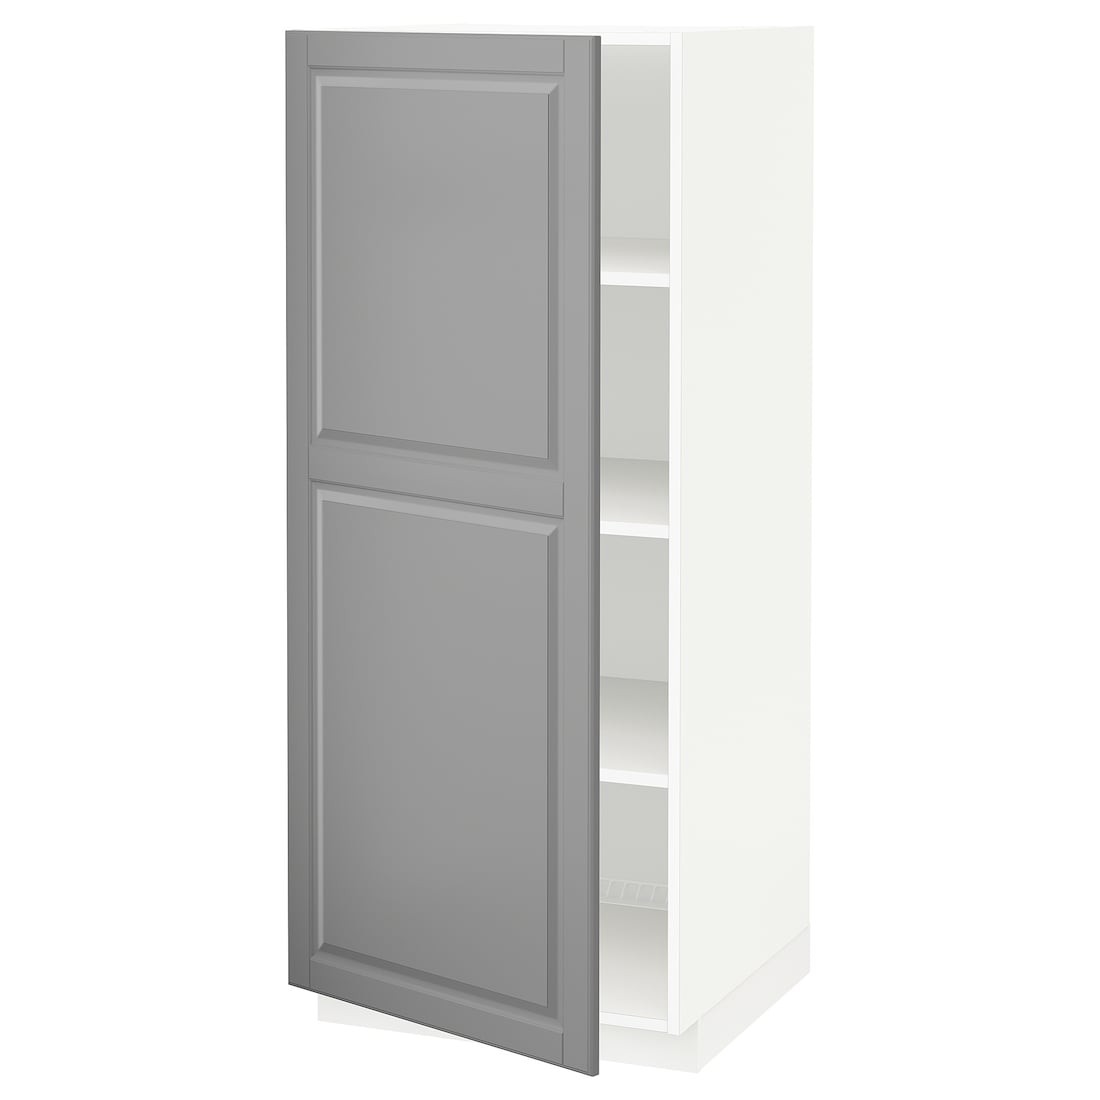 METOD МЕТОД Высокий шкаф с полками, белый / Bodbyn серый, 60x60x140 см